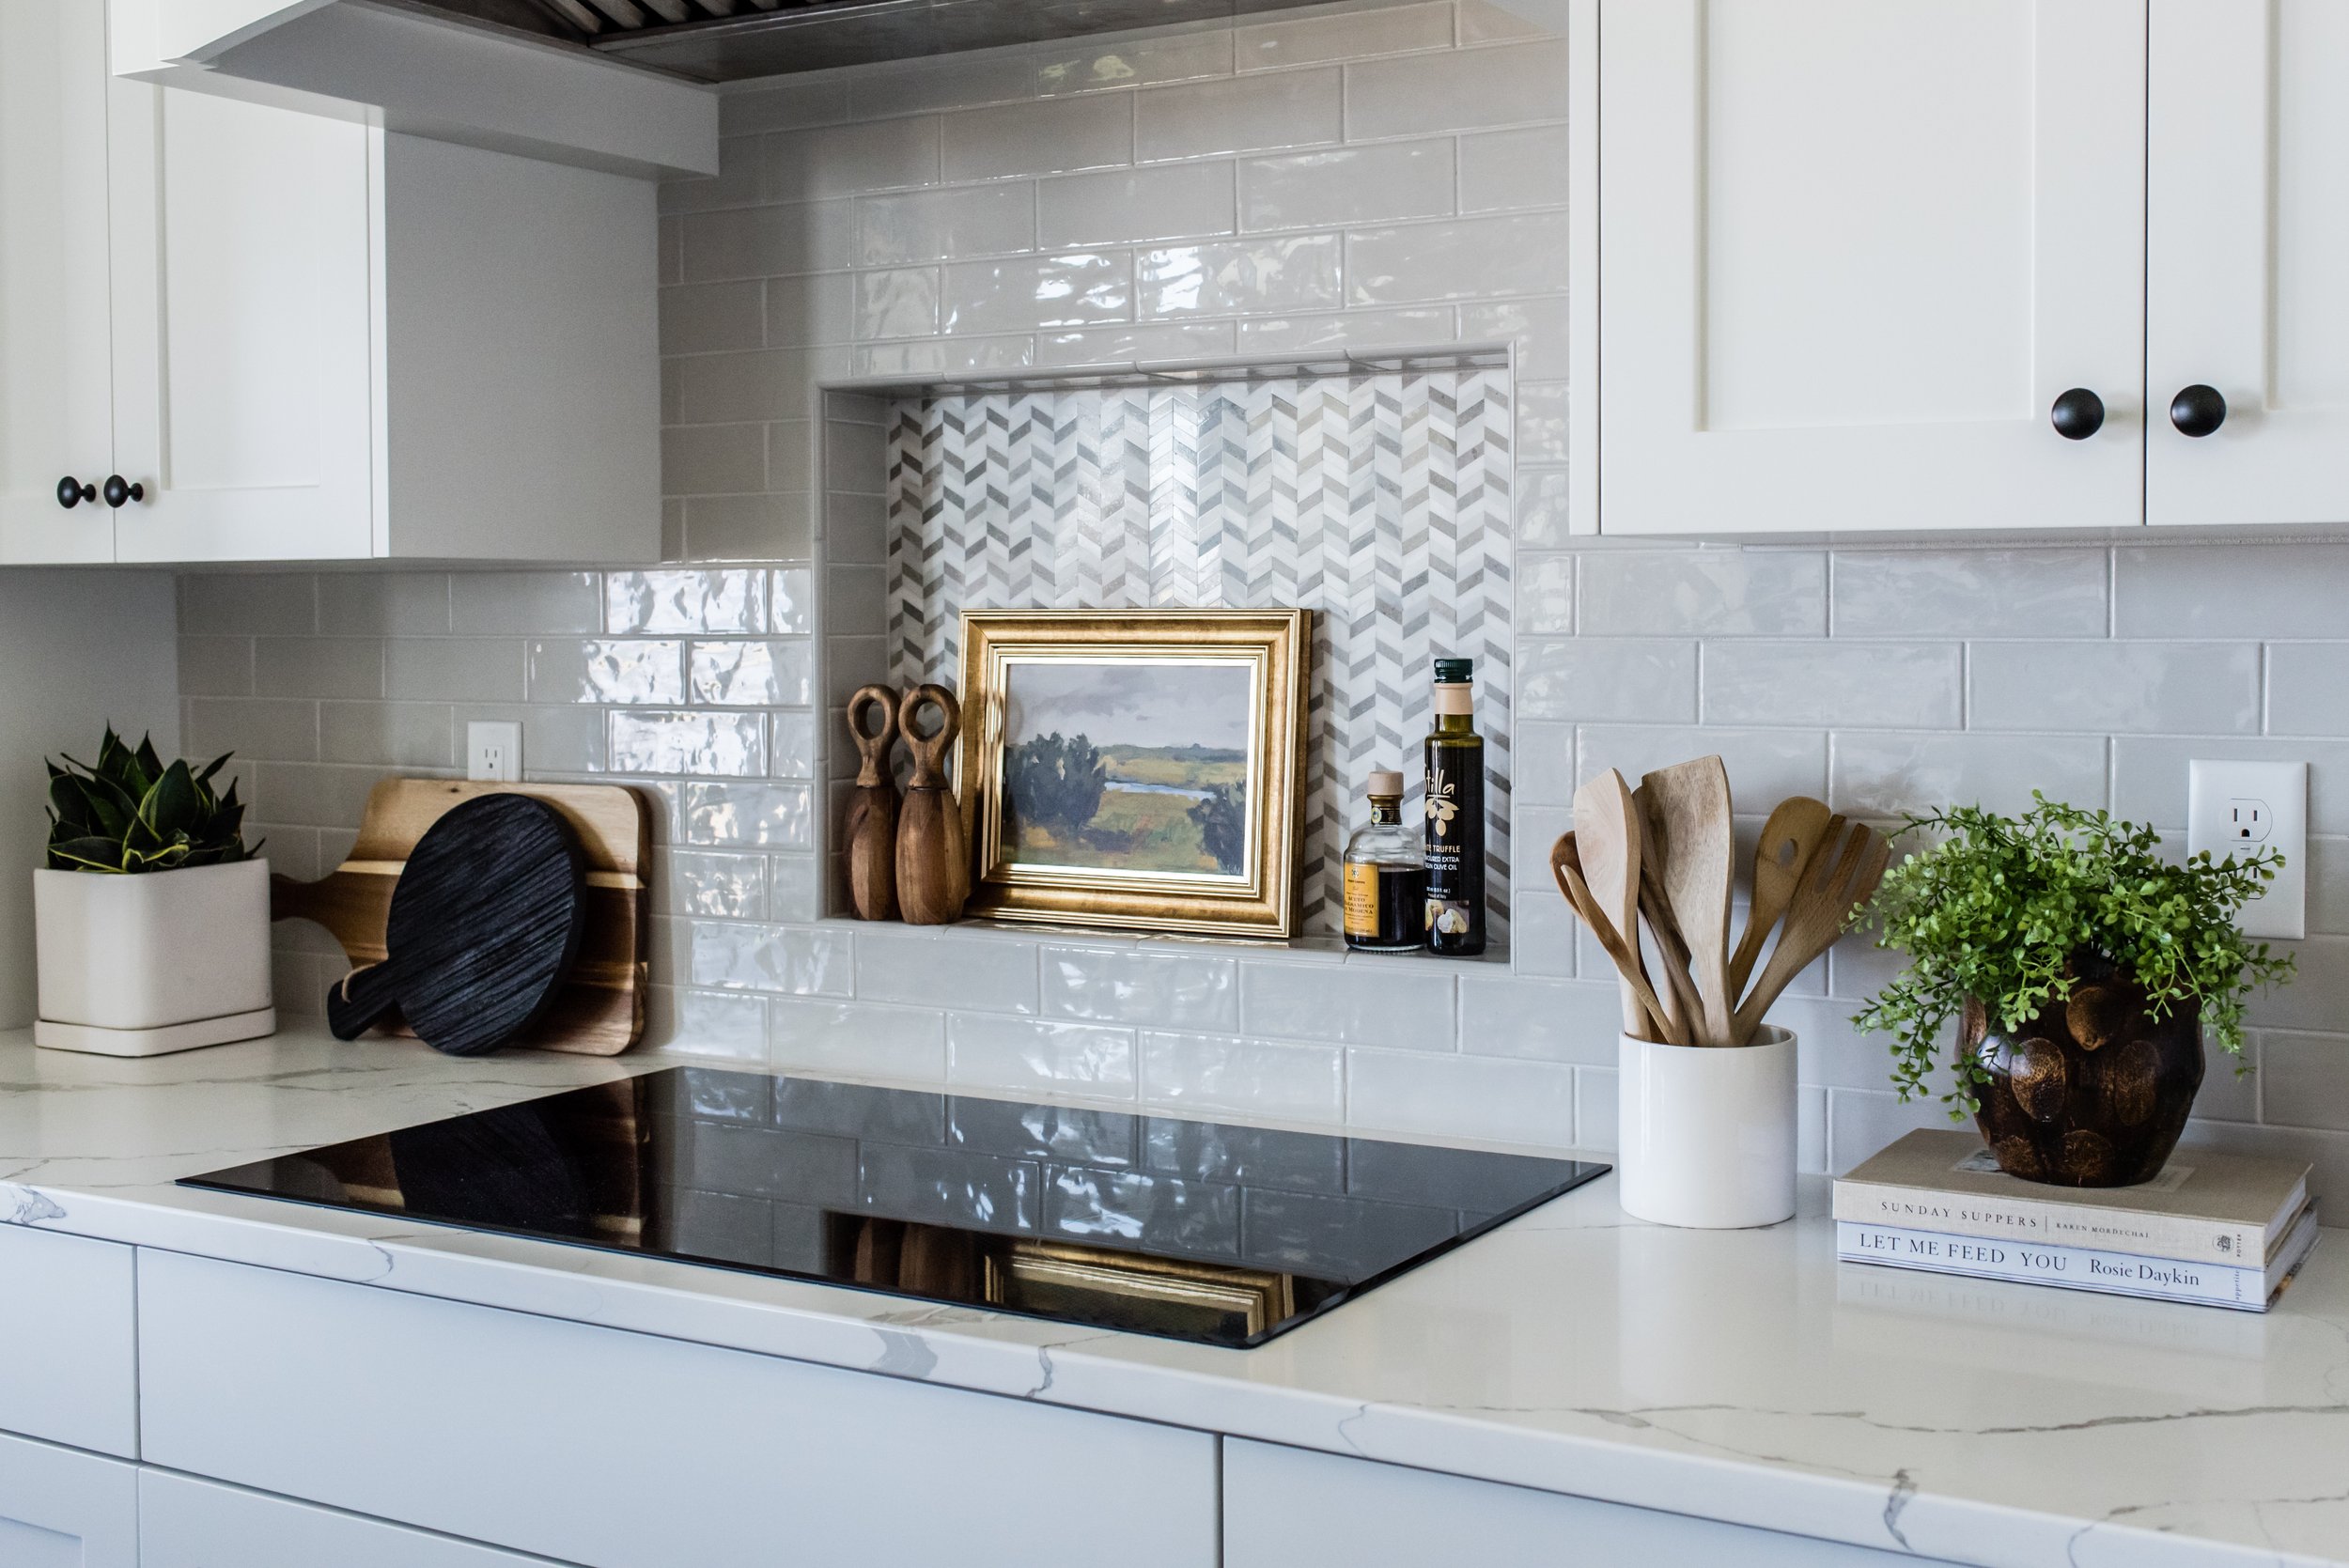  Glass tile vs Ceramic tile vs Porcelain Tile and what the best choice is by Liz Powell Design in Logan, Utah. Tile options and choices bathroom kitchen choices #LizPowellDesign #InteriorDesignUtah #InteriorDesigner #buildingahome #tile #backsplash #